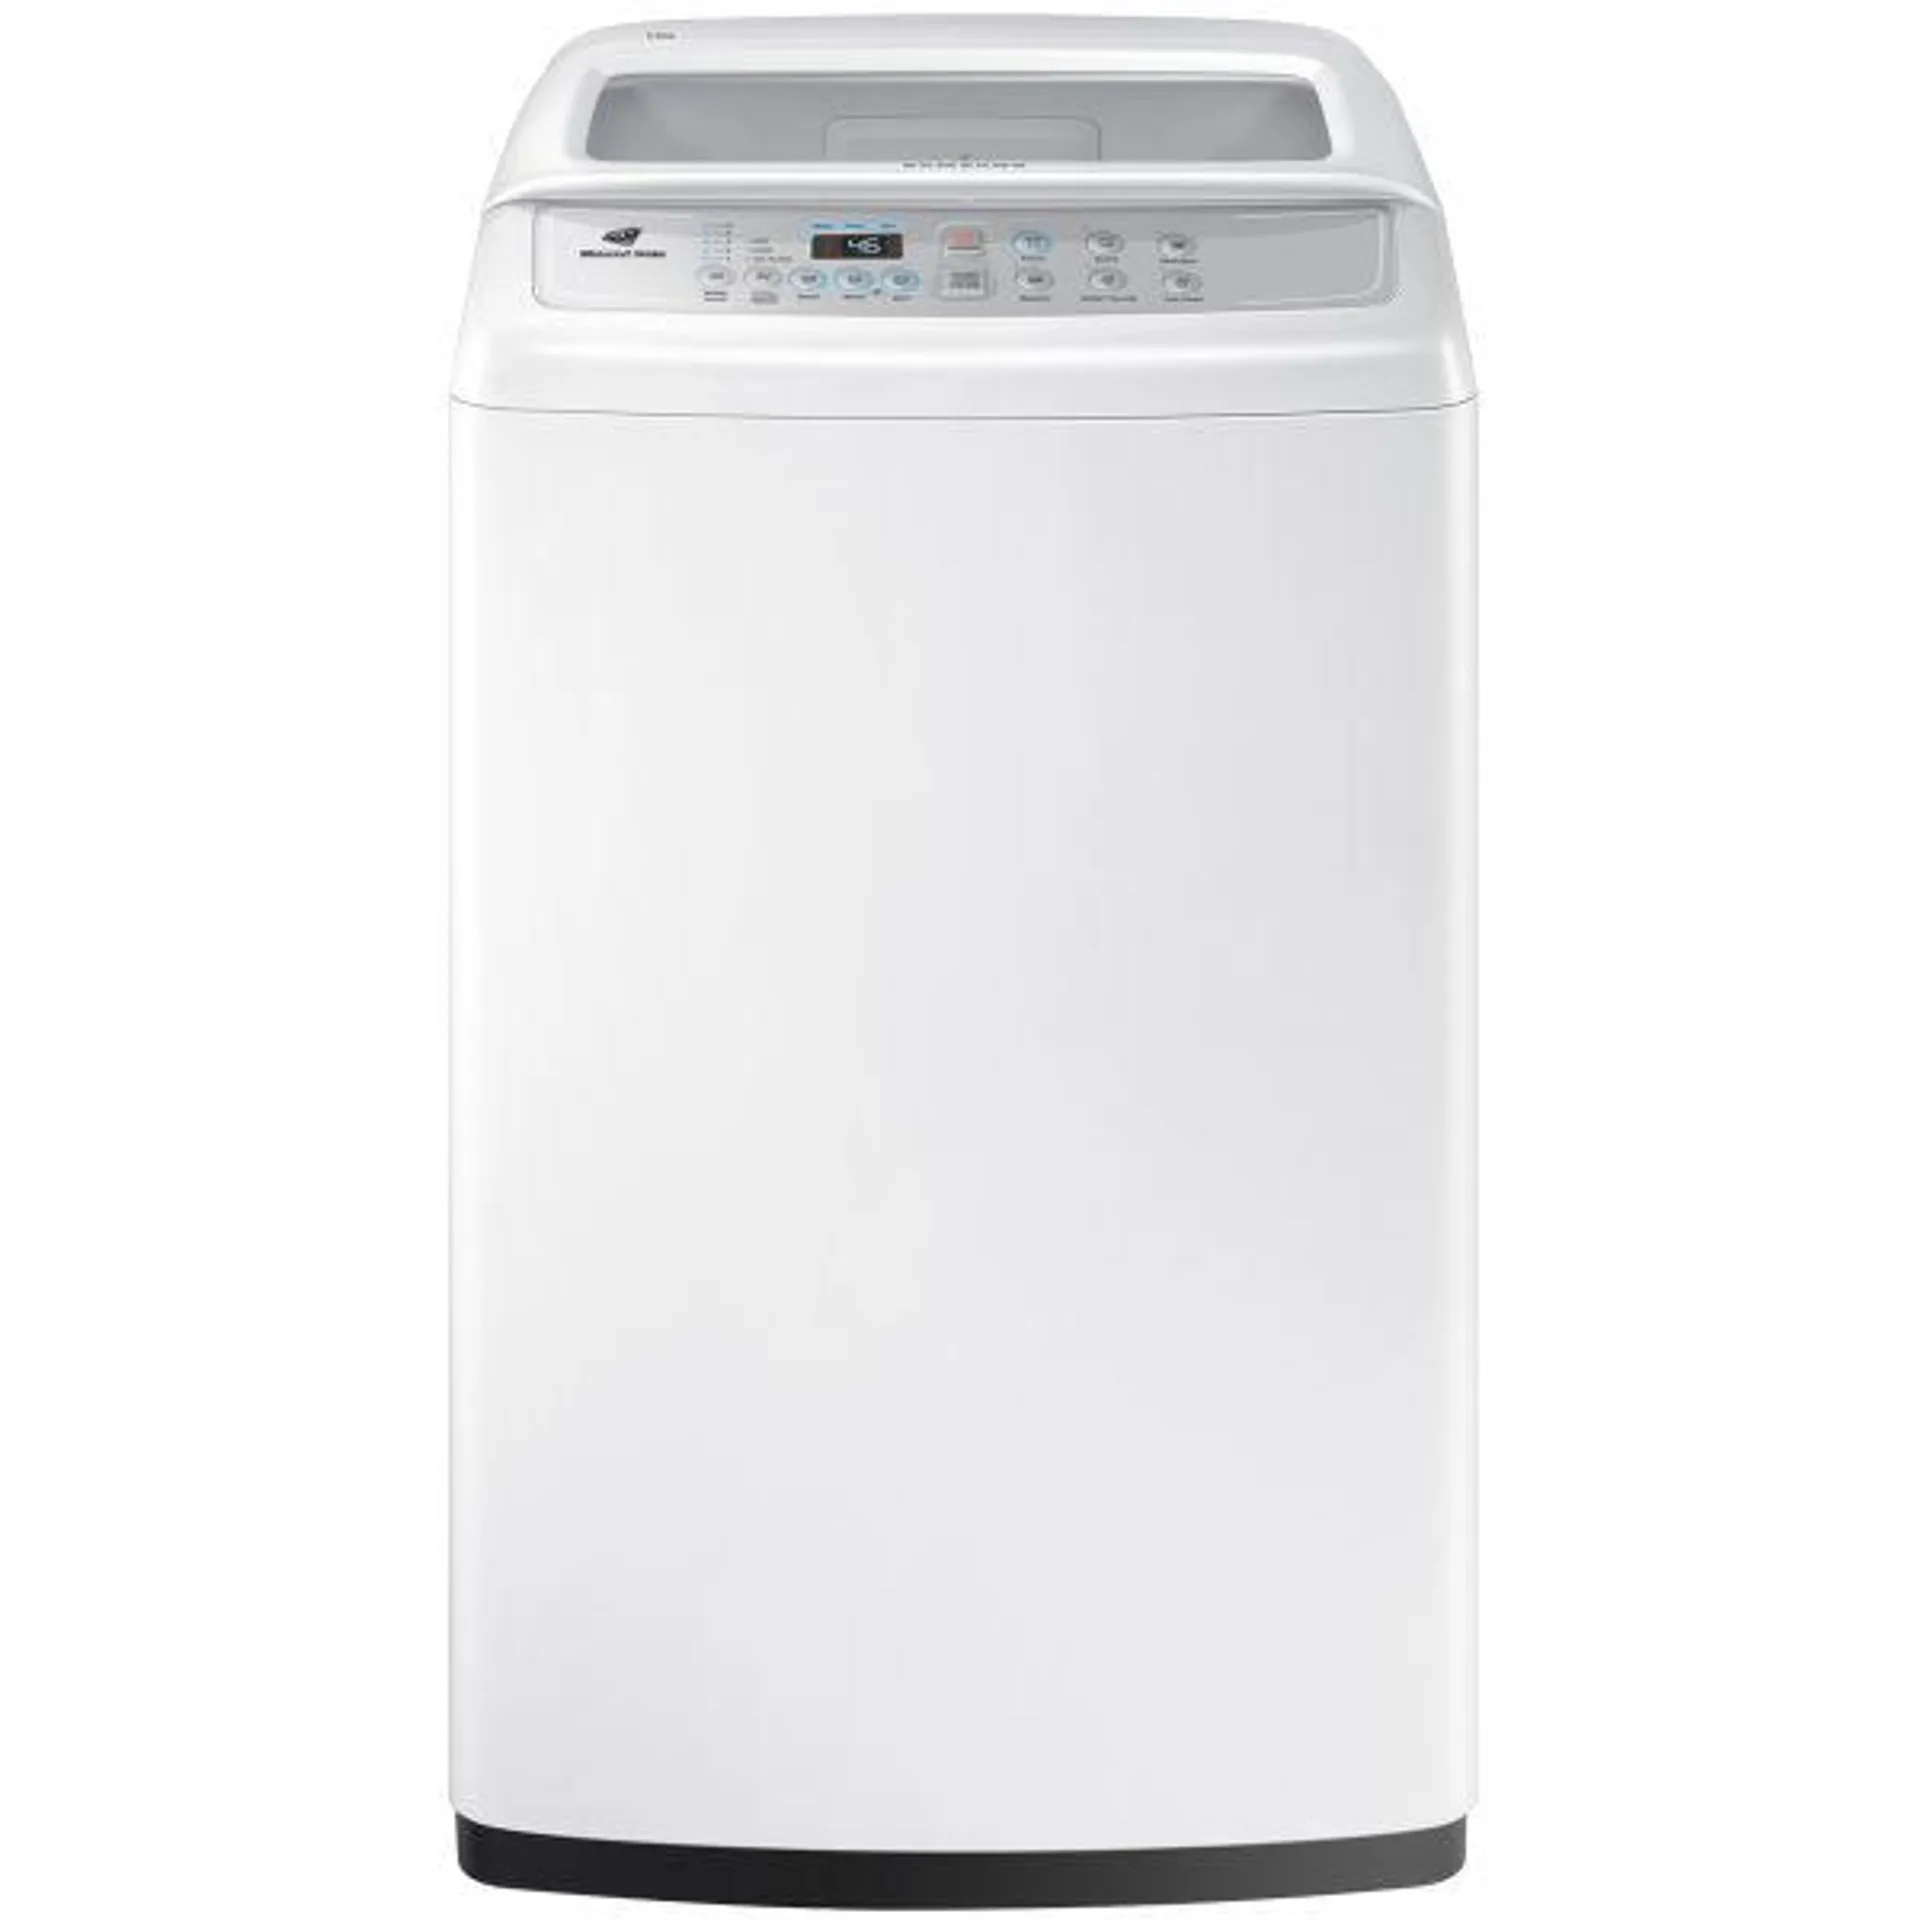 Samsung WA55H4000SW 5.5kg Top Load Washing Machine